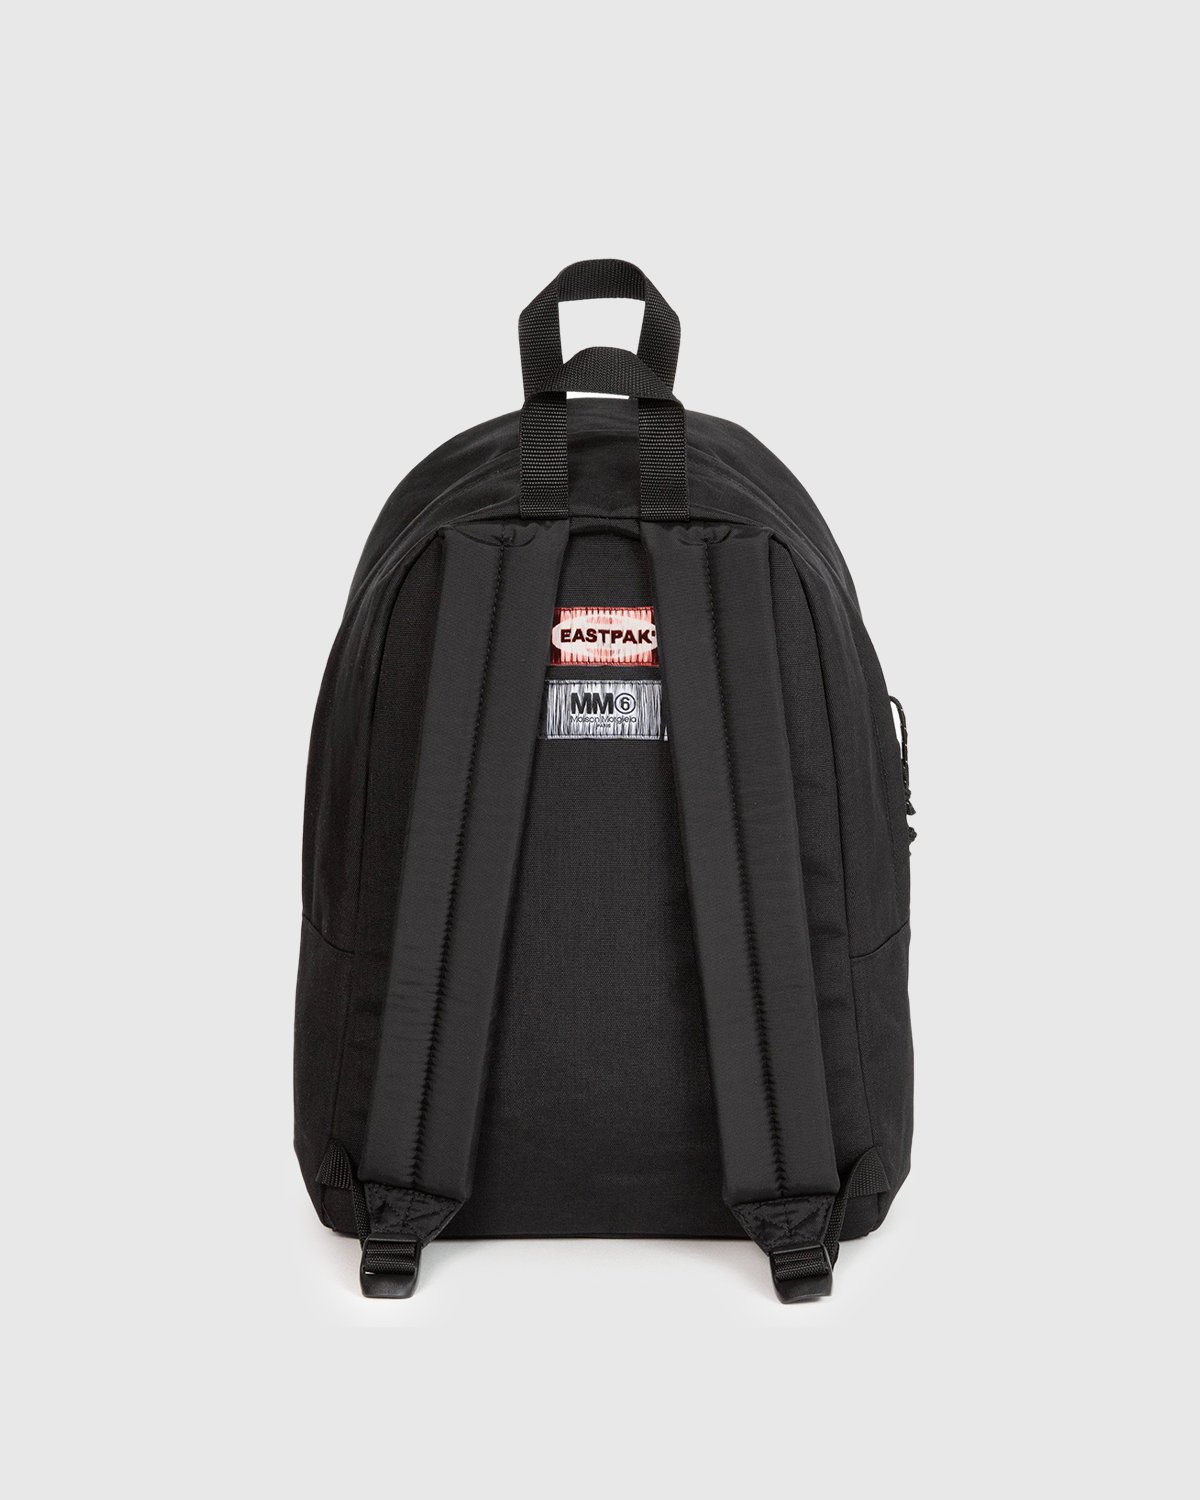 MM6 Maison Margiela x Eastpak - Padded XL Backpack Black - Accessories - Black - Image 1